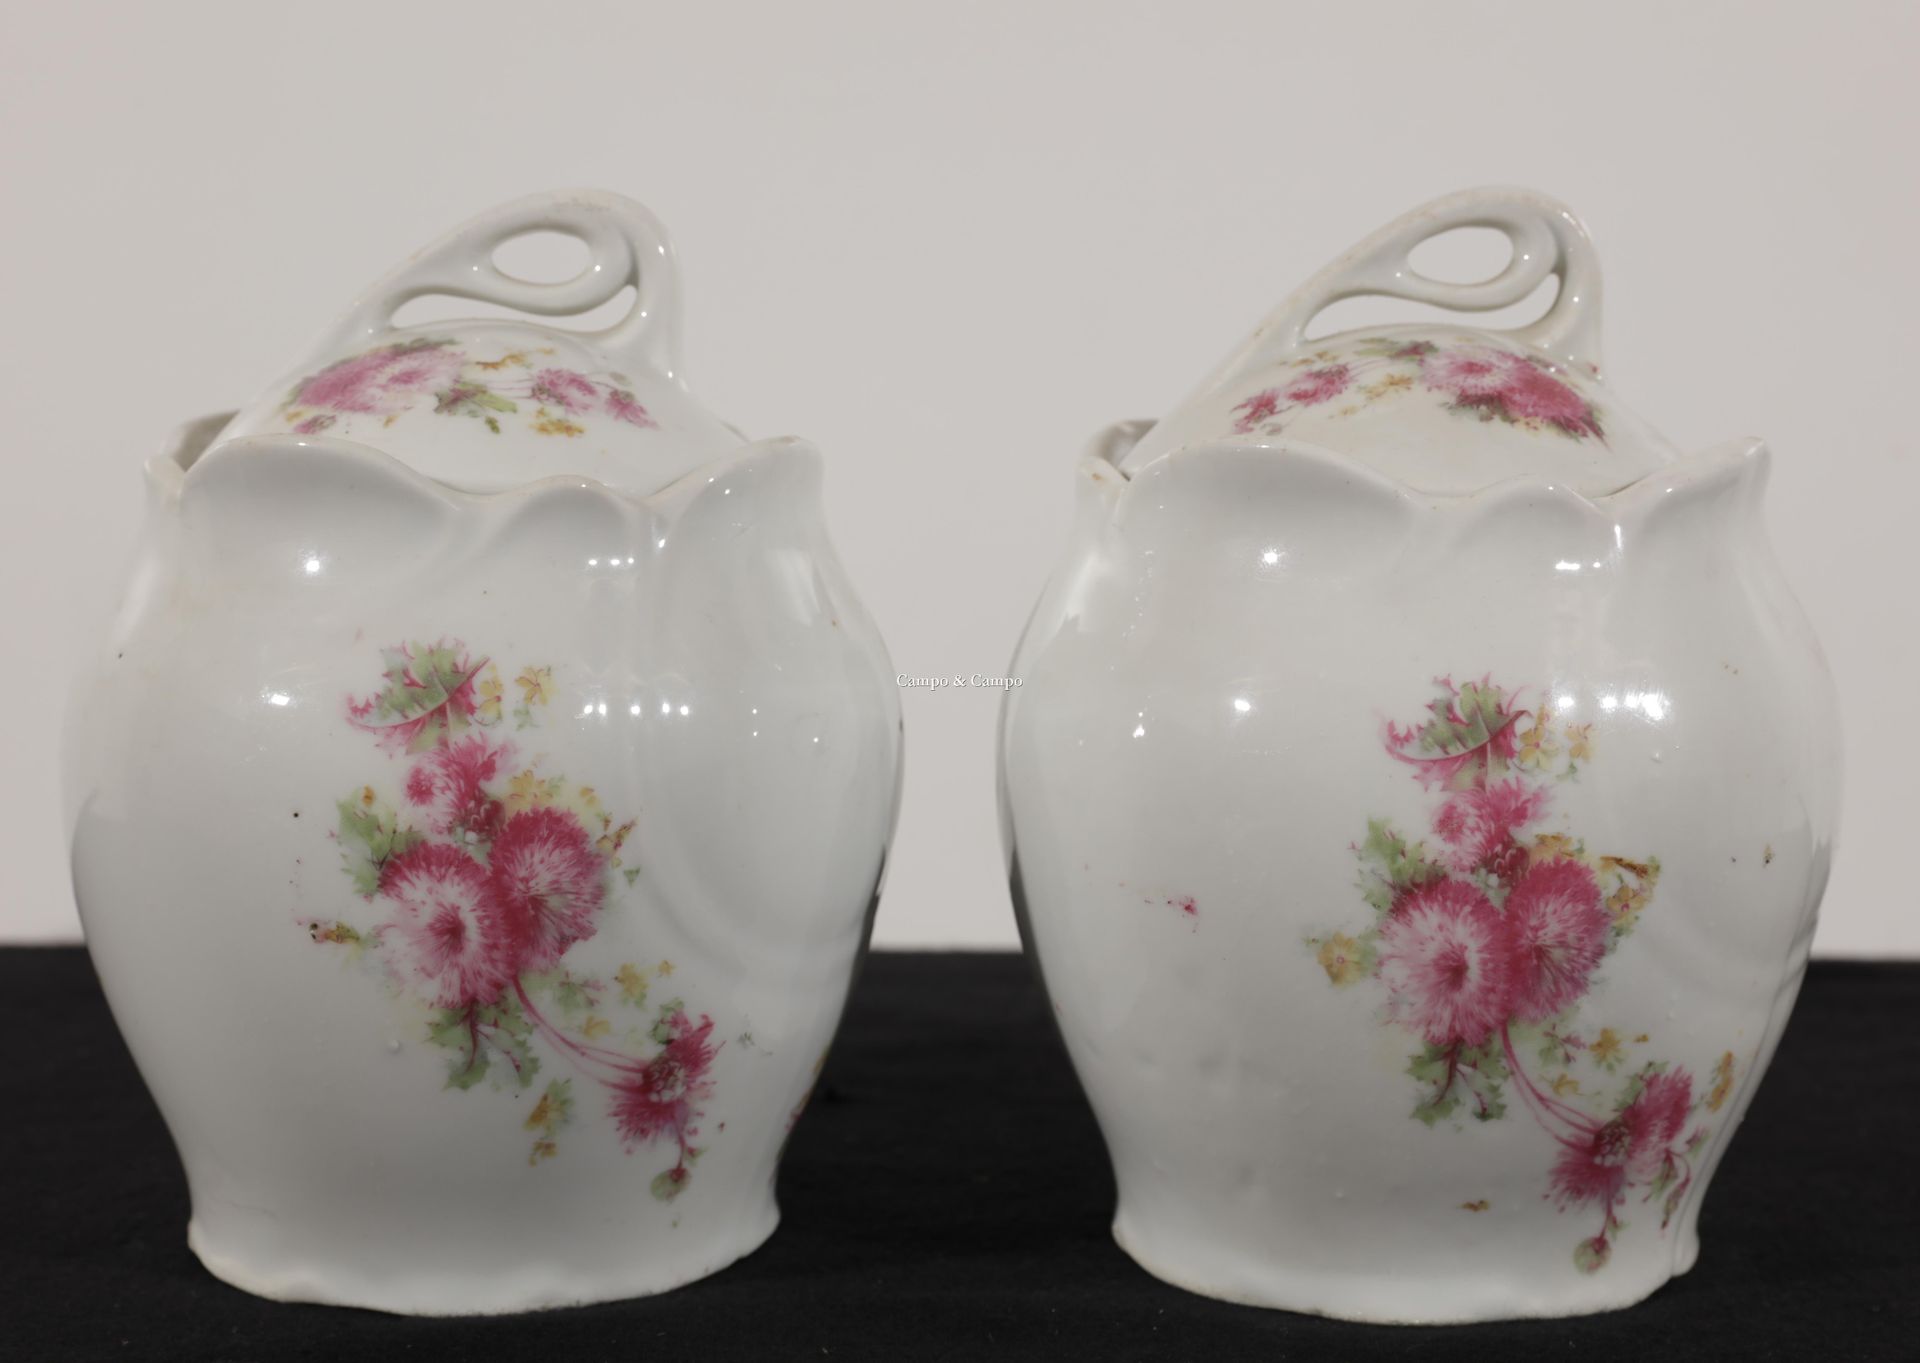 VARIA Pair of white porcelain pots with flowers
Paar dekselpotjes van wit porsel&hellip;